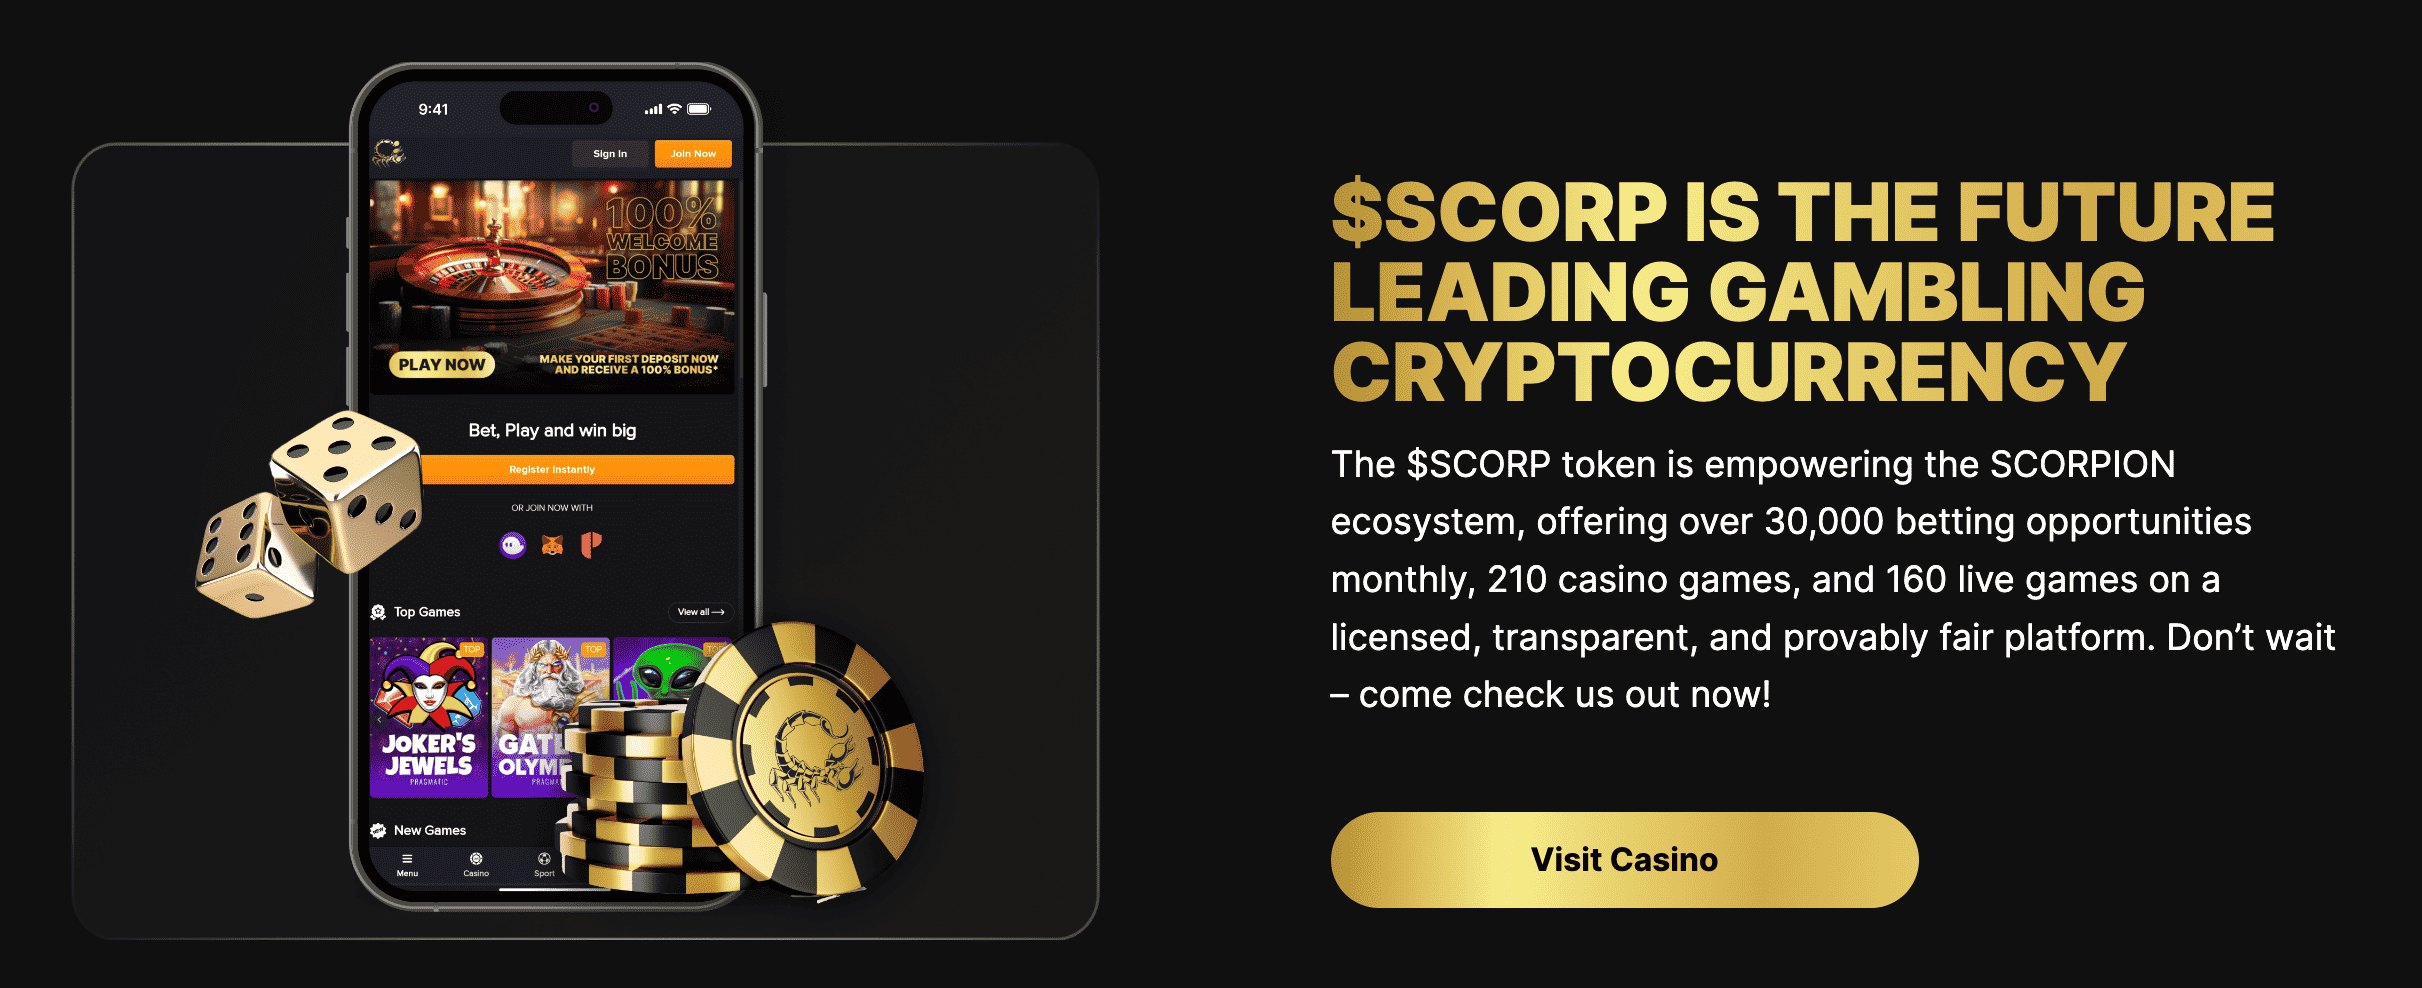 Scorpion Casino gambling